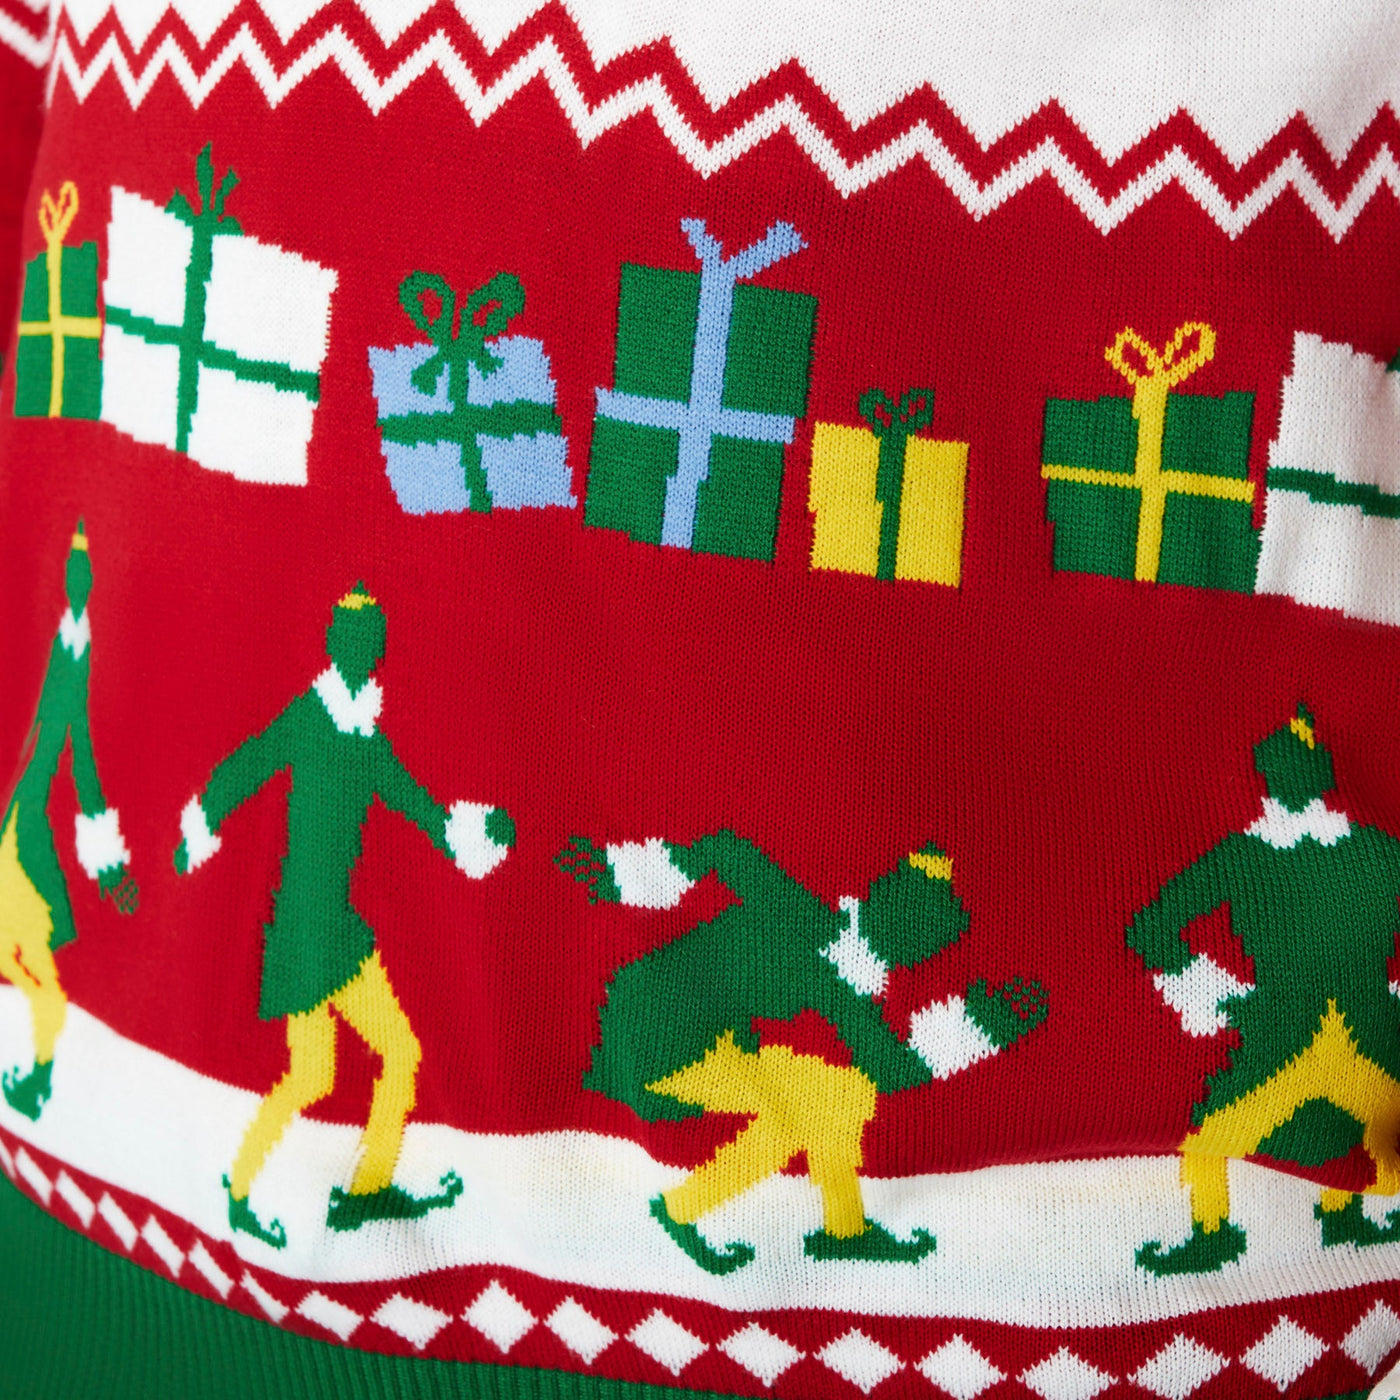 Women's Elf Christmas Sweater